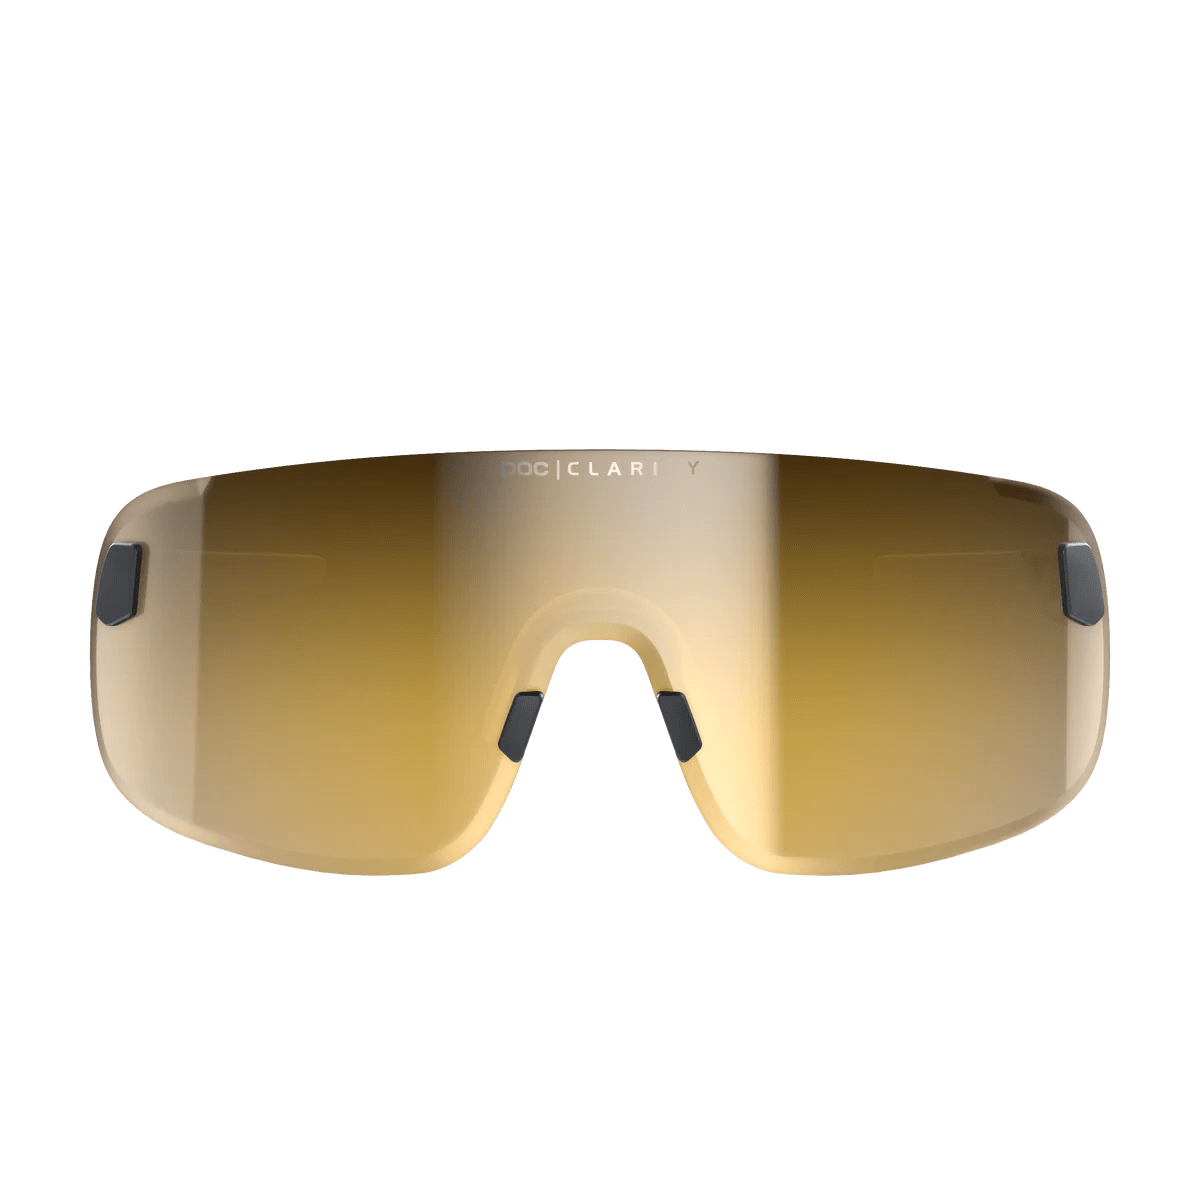 POC Elicit Sunglasses Uranium Black Clarity Road/Partly Sunny Gold Apparel - Apparel Accessories - Sunglasses